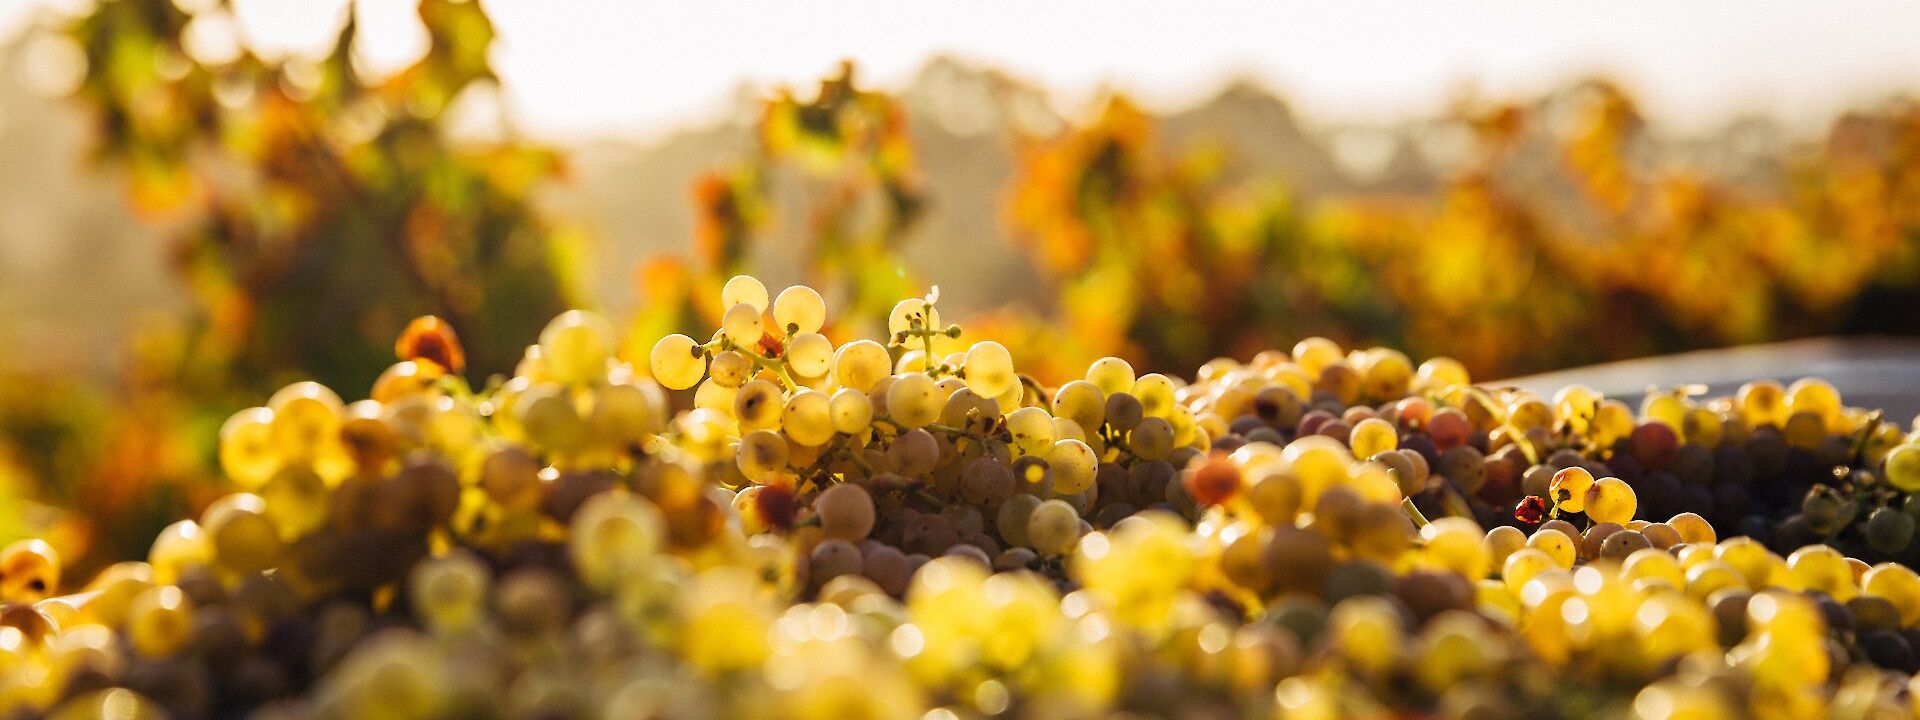 Golden grapes at Barossa Valley, Adelaide Hills, Australia. Thomas Schaefer@Unsplash